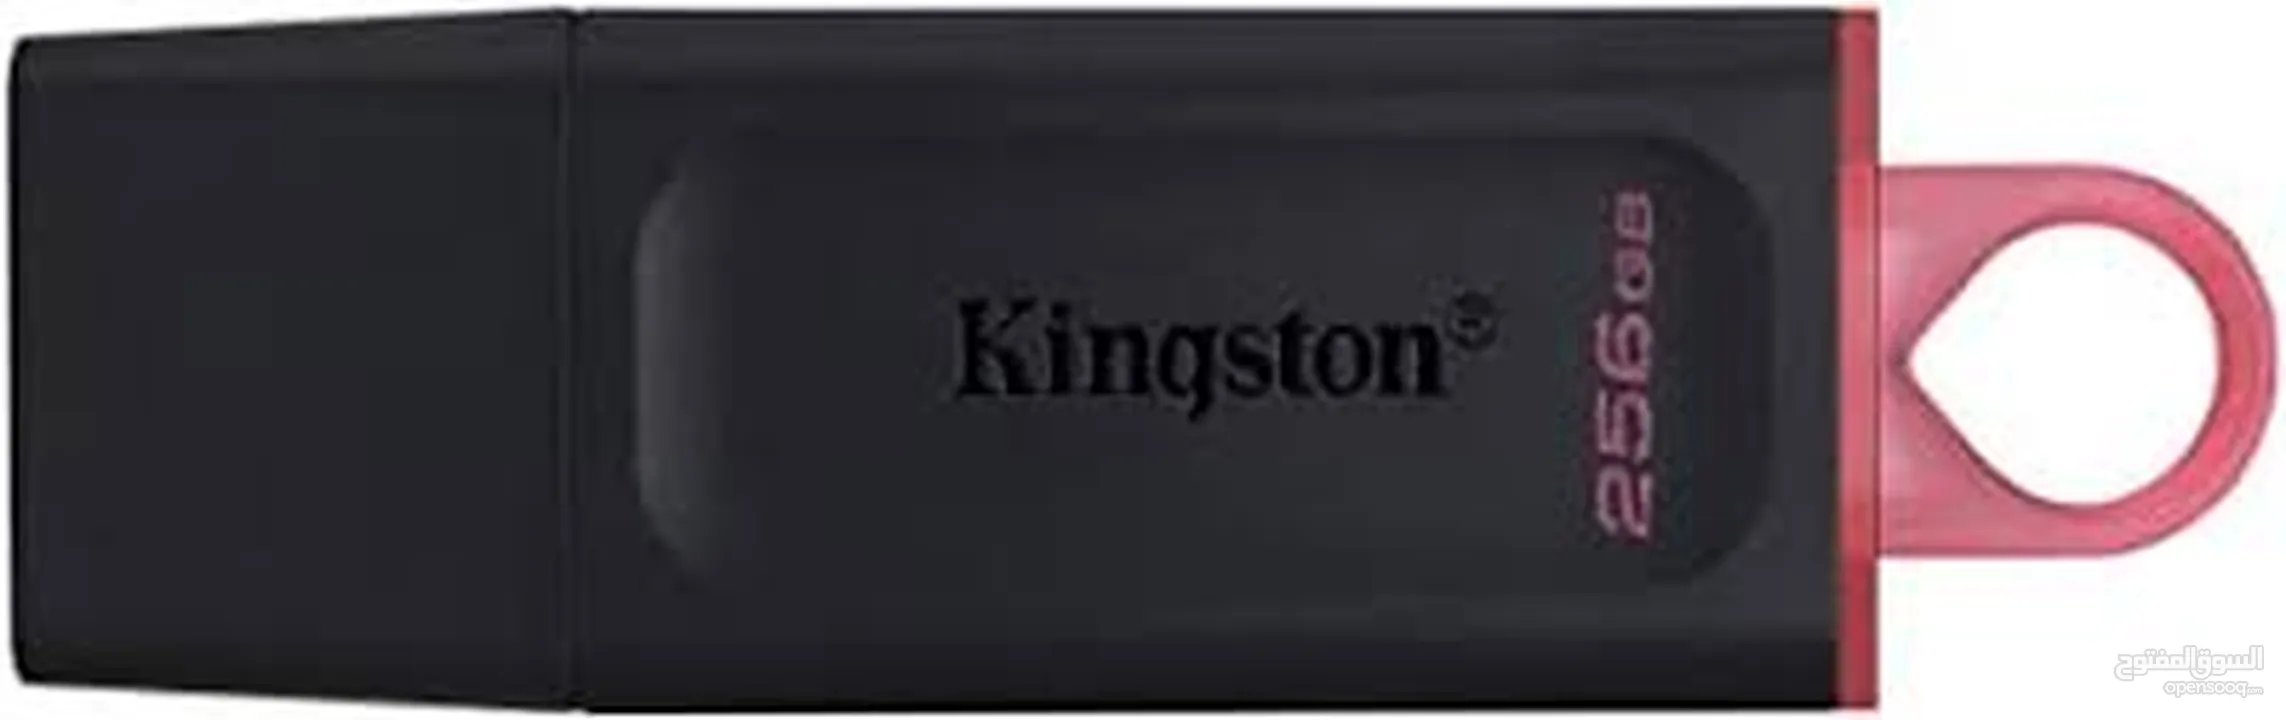 Kingston Data Traveler 256GB USB 3.2 Flash Drive فلاشه يو اس بي من كنجستون بحجم 256 جيجا 